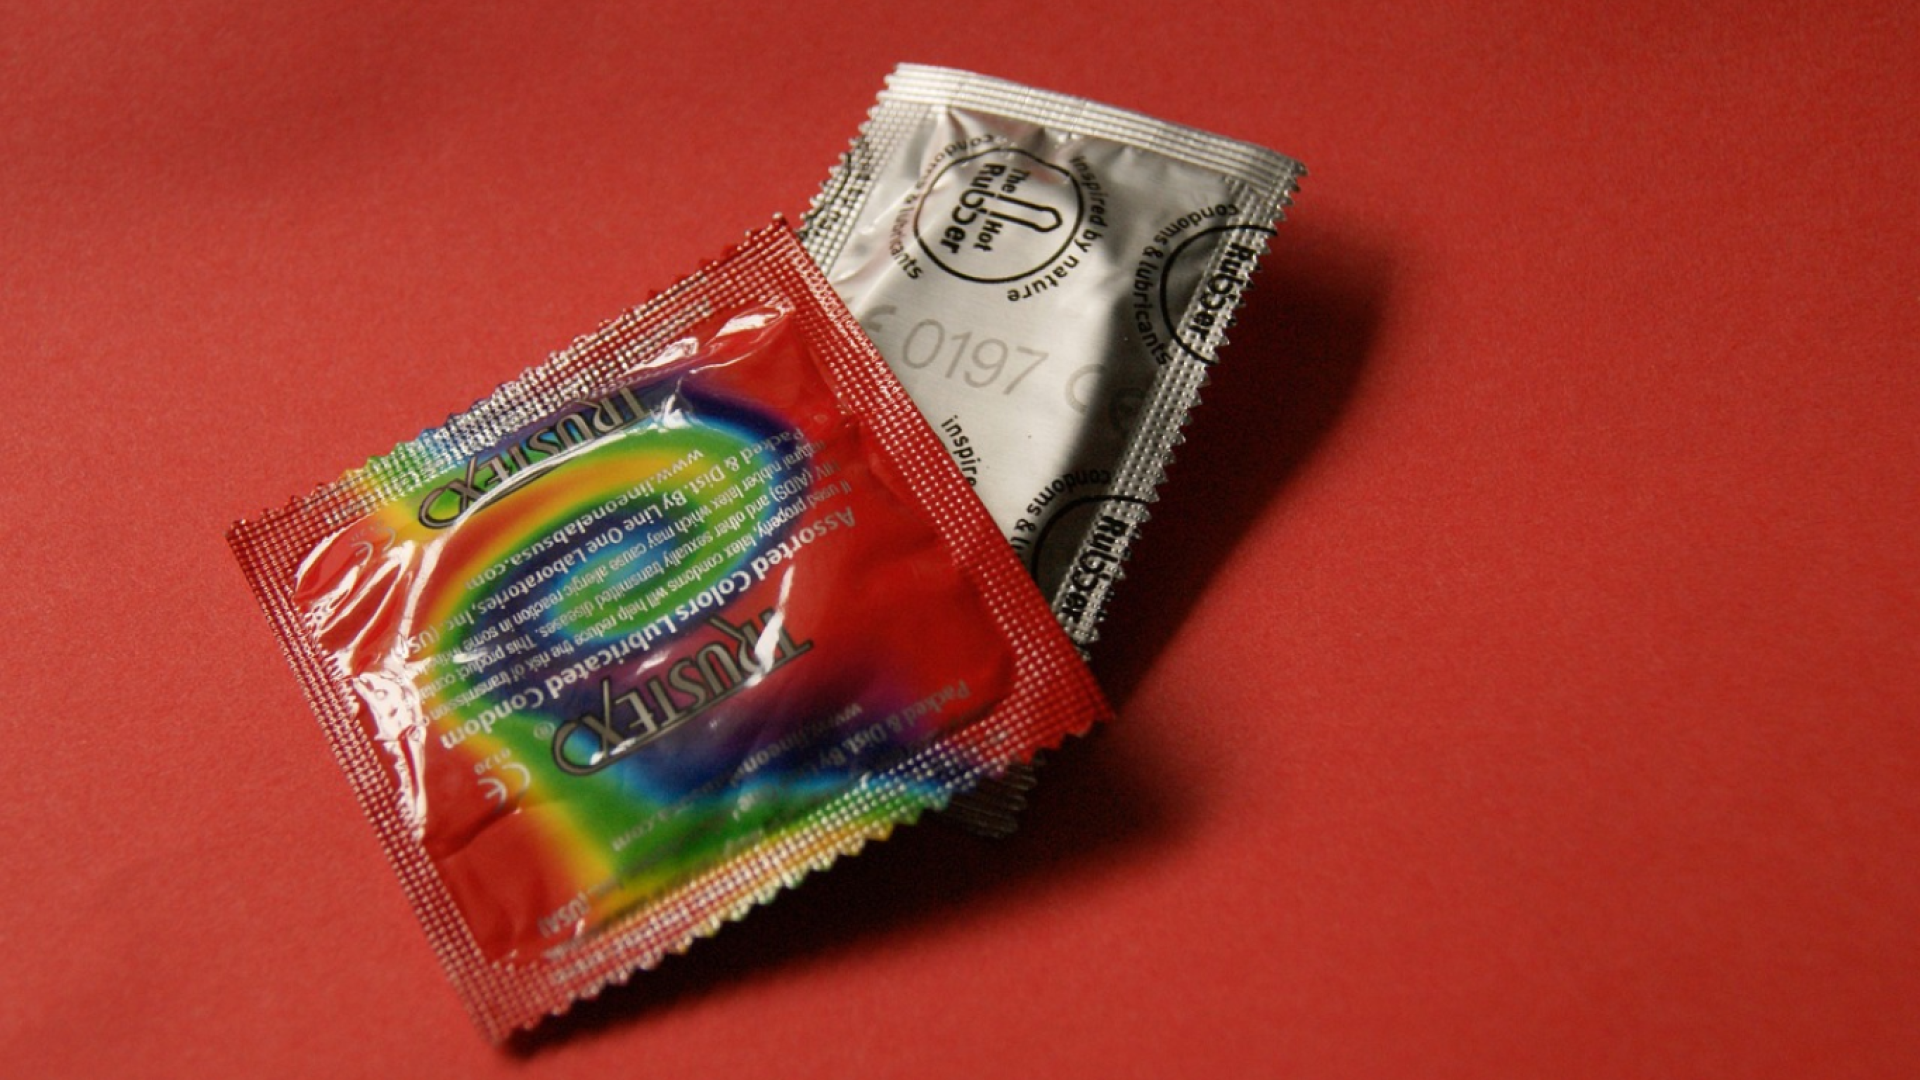 Foto colorida mostra duas embalagens de preservativo masculino